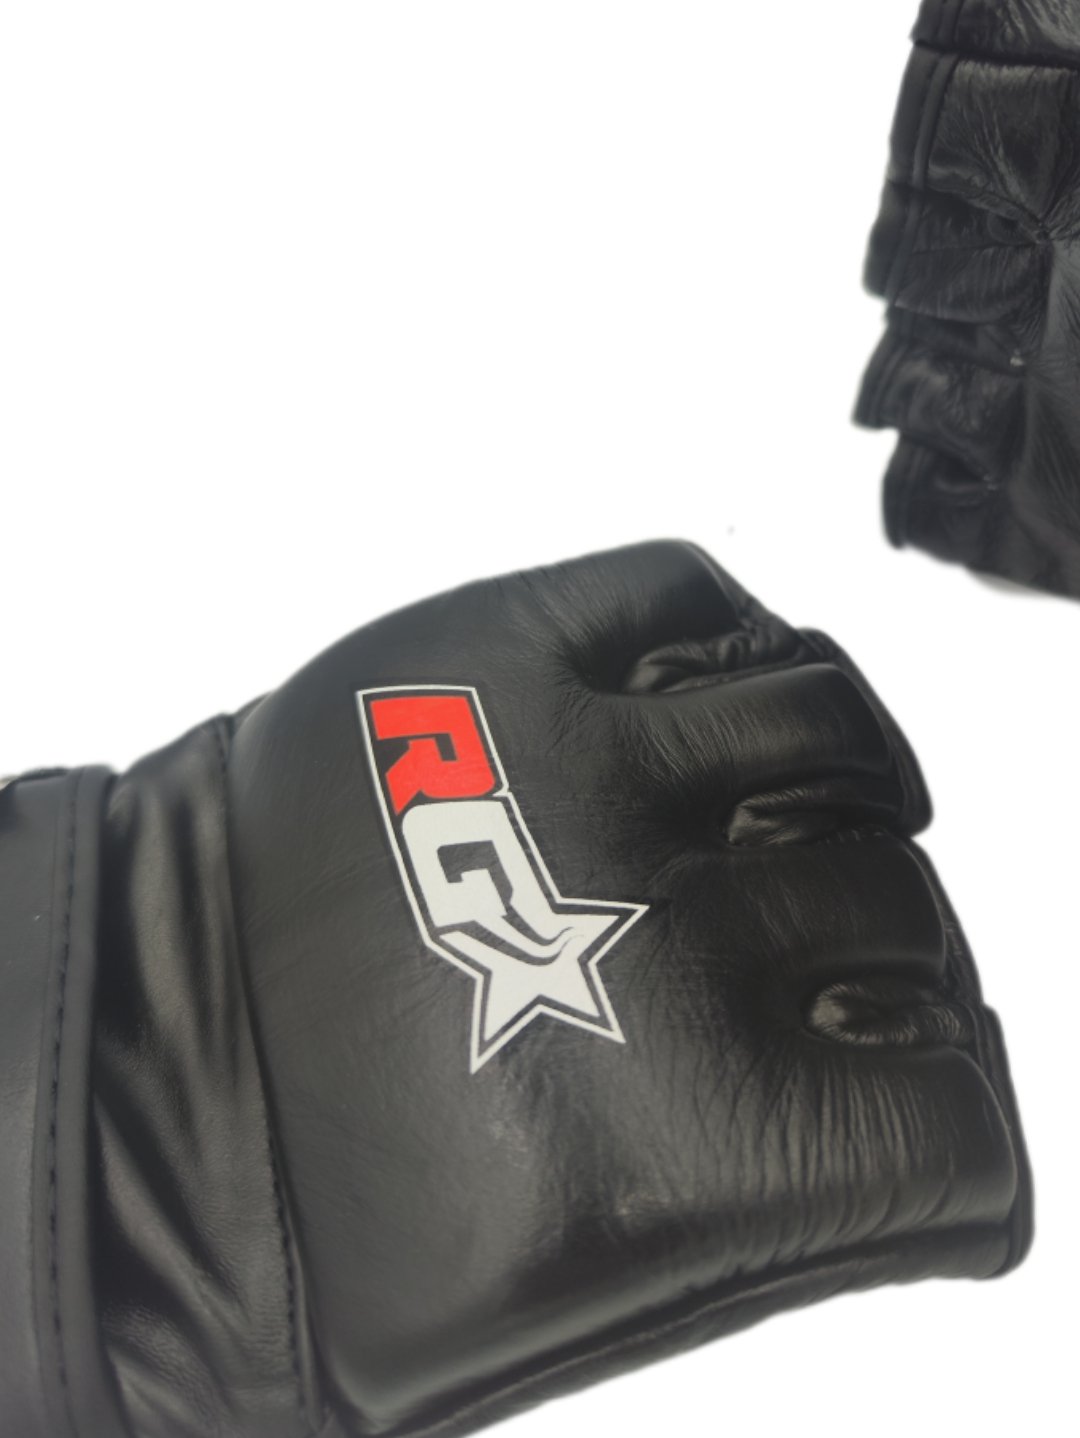 Guantillas MMA Premium Manos Libres - Black – Redglove